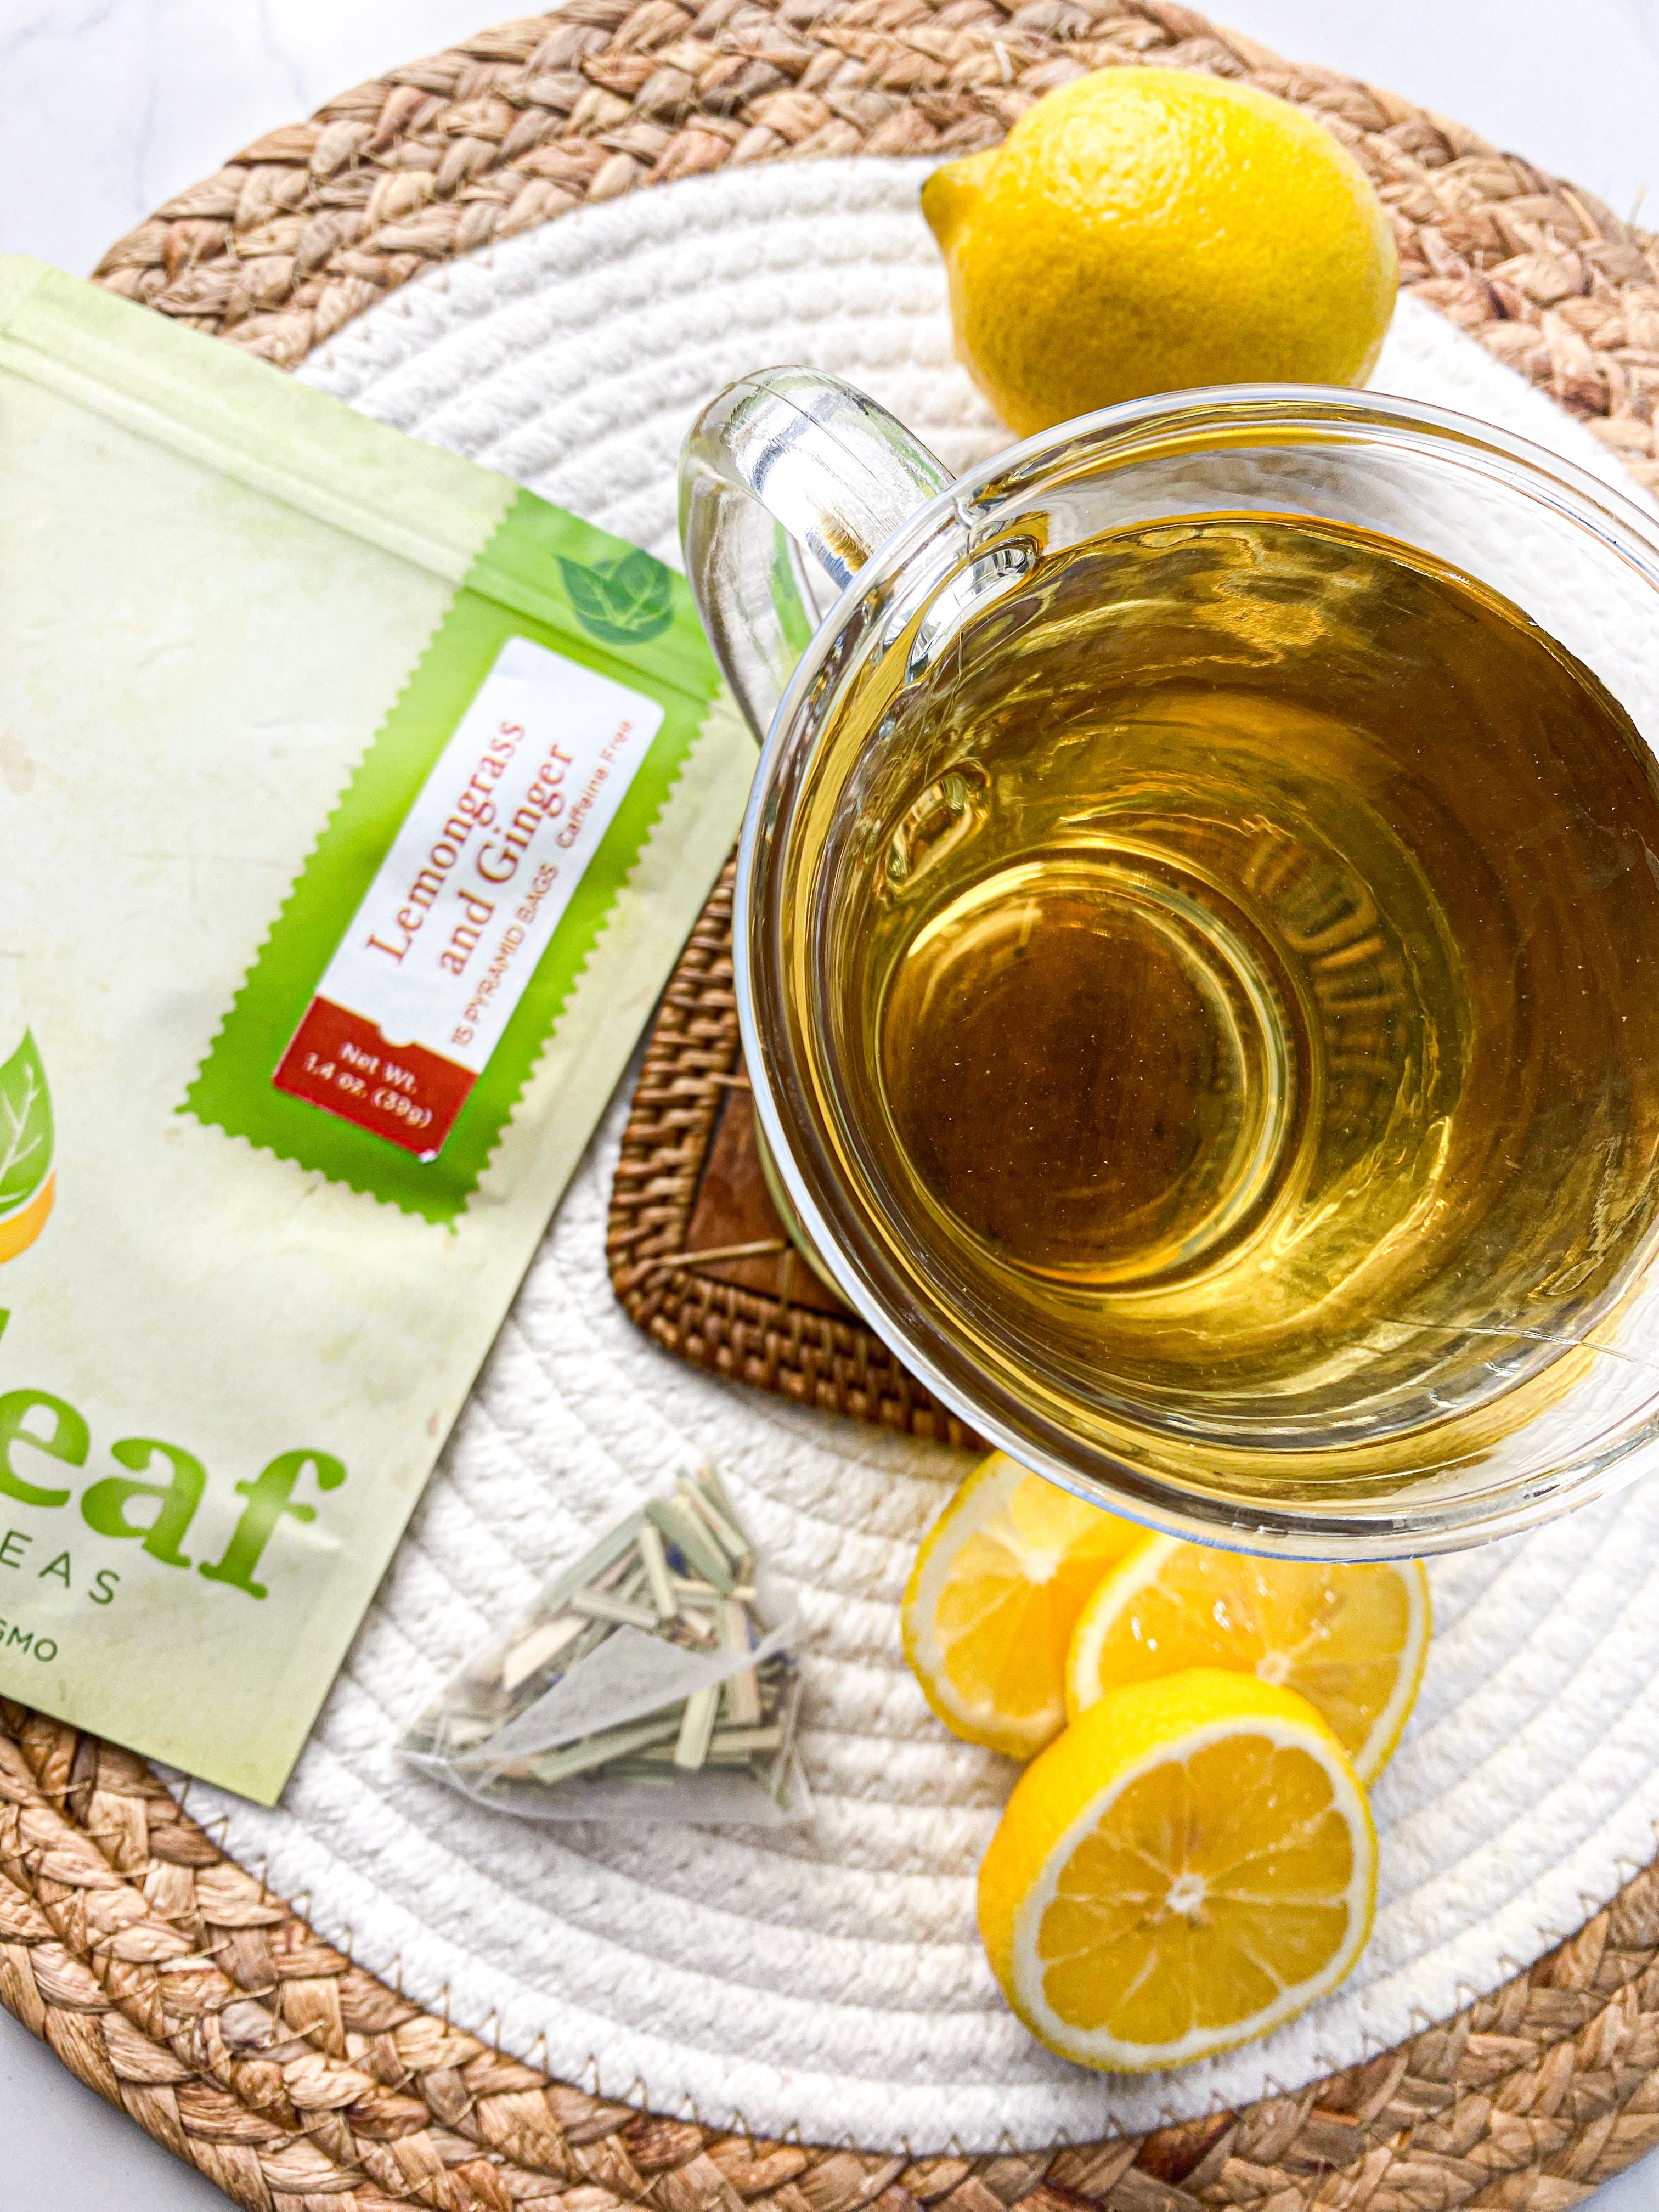 Lemongrass Herbal Tea Bulk Pyramid Teabags